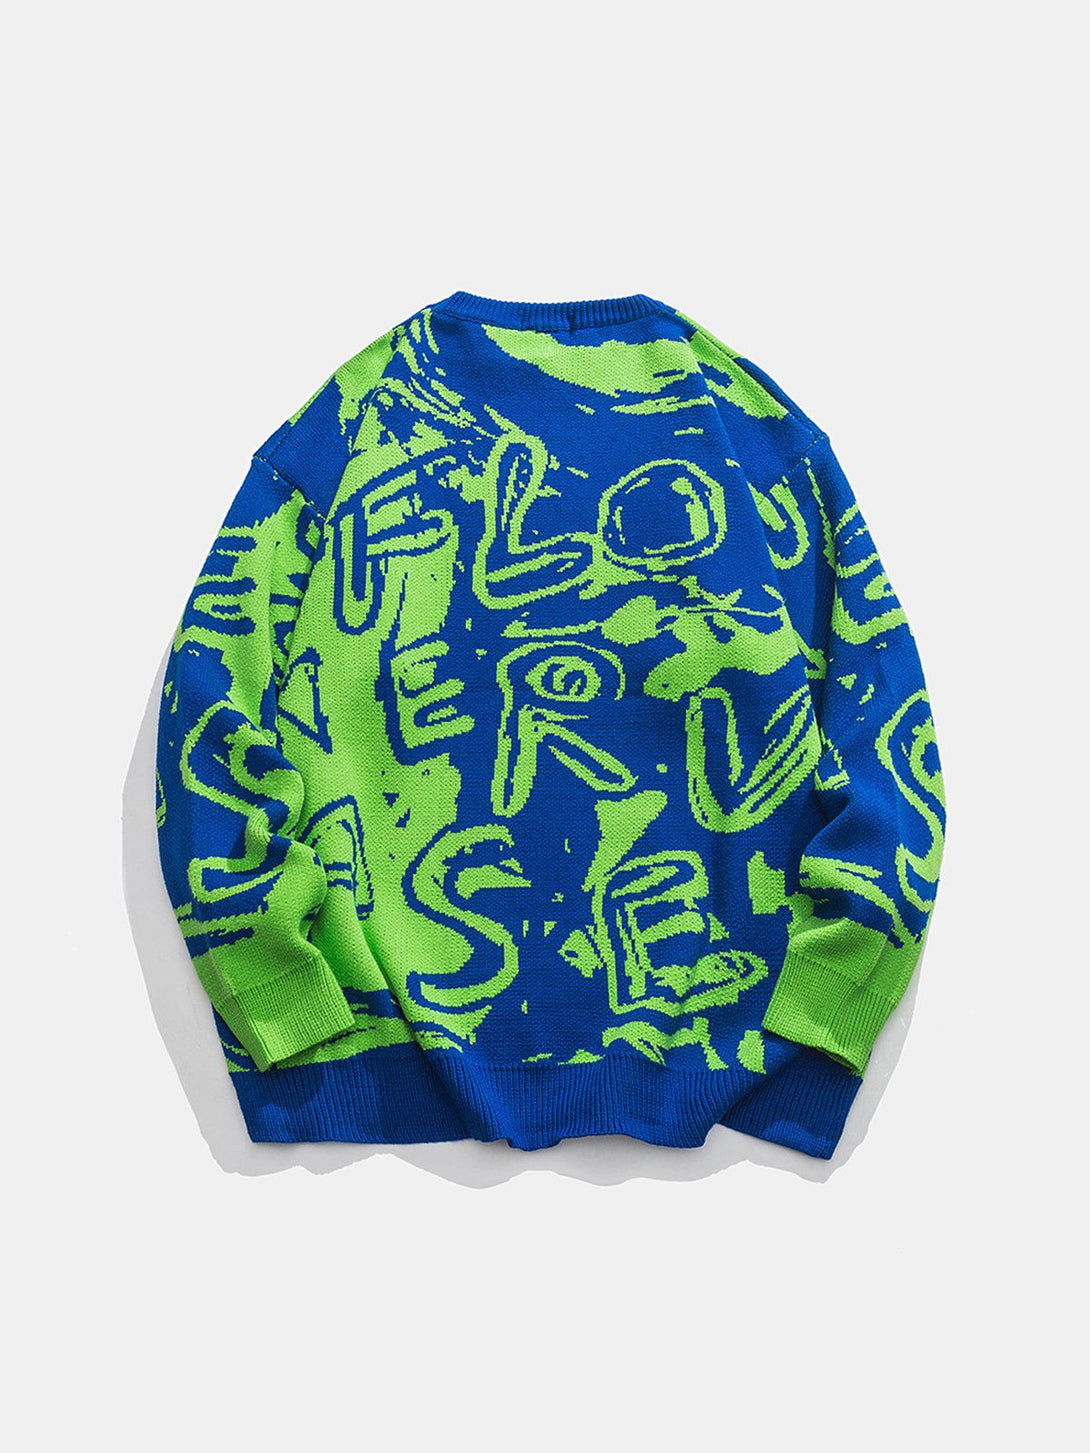 Majesda® - Letters Graffiti Sweater outfit ideas streetwear fashion